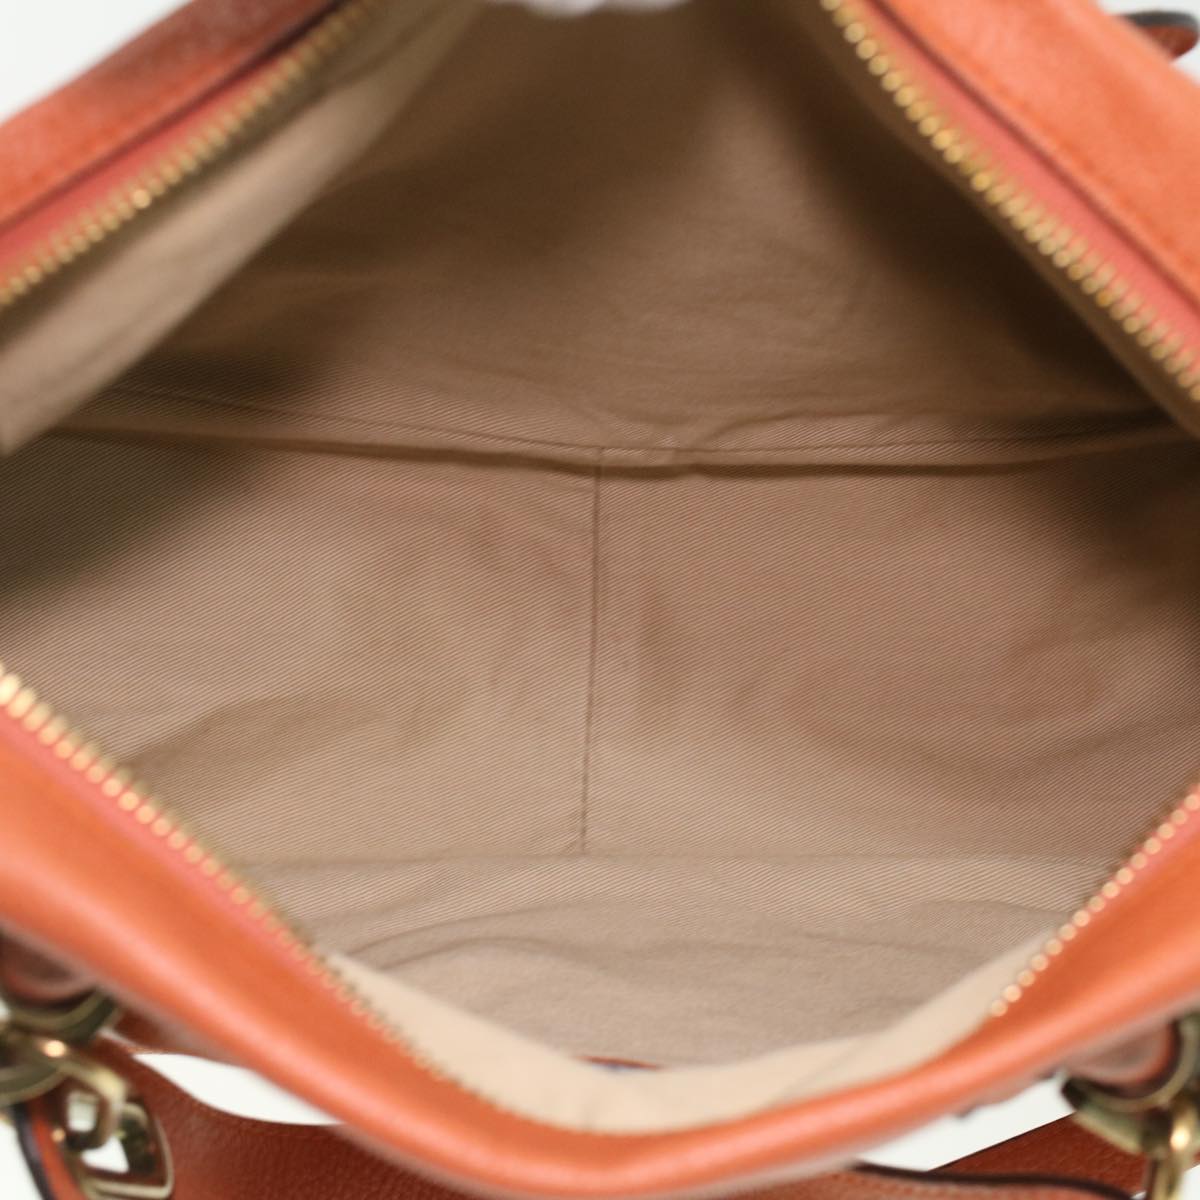 Chloe Shoulder Bag Leather 2way Orange 02-12-63-65 Auth am3806